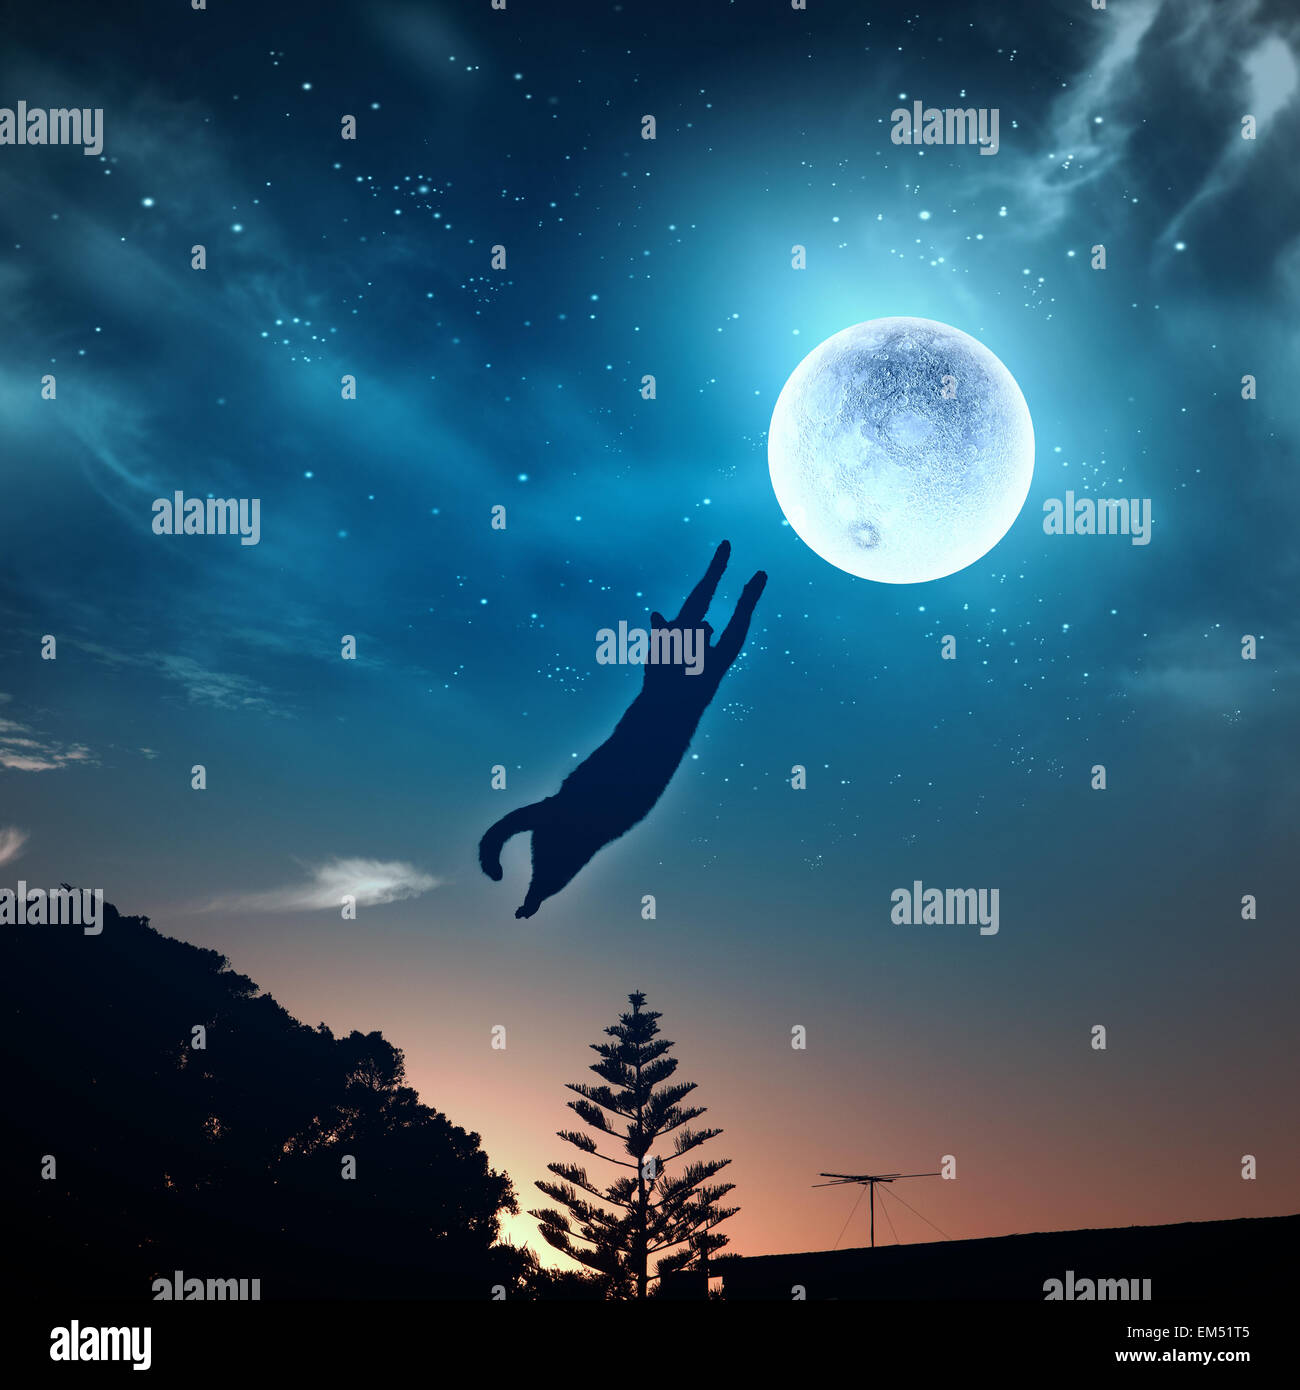 cat-catching-moon-stock-photo-alamy